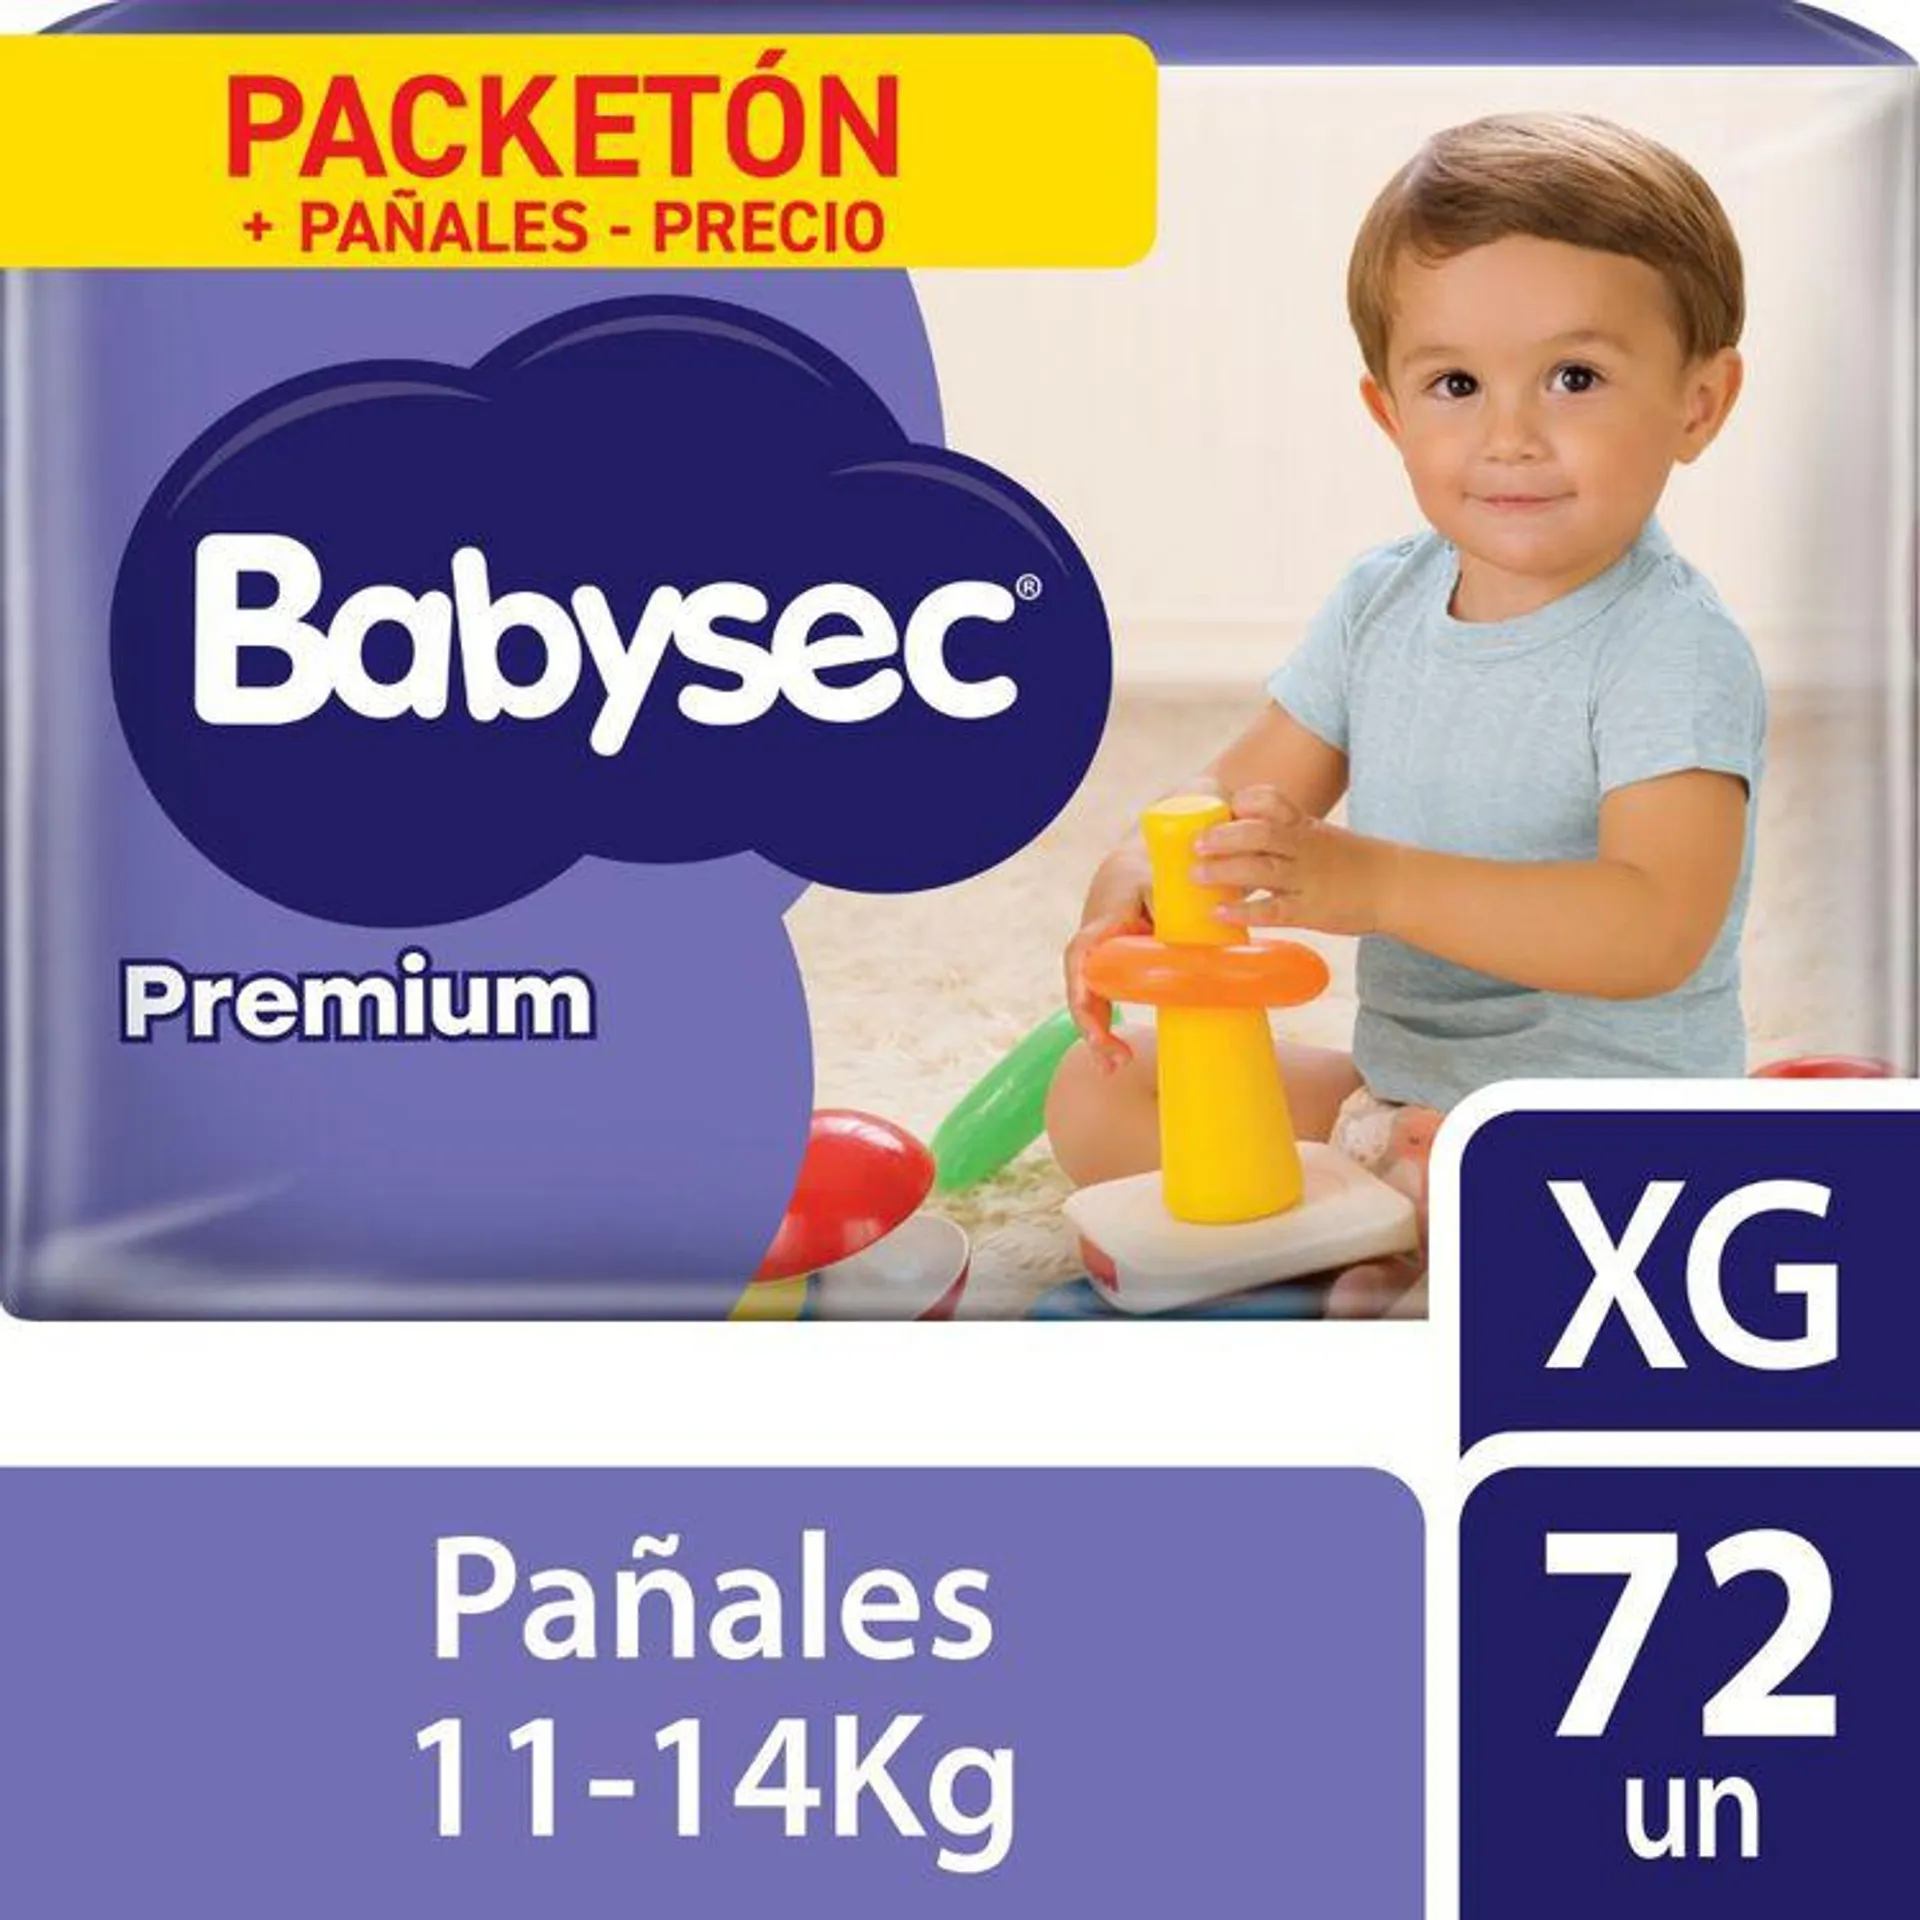 Pañales para Bebé Babysec Premium Talla XG 72un